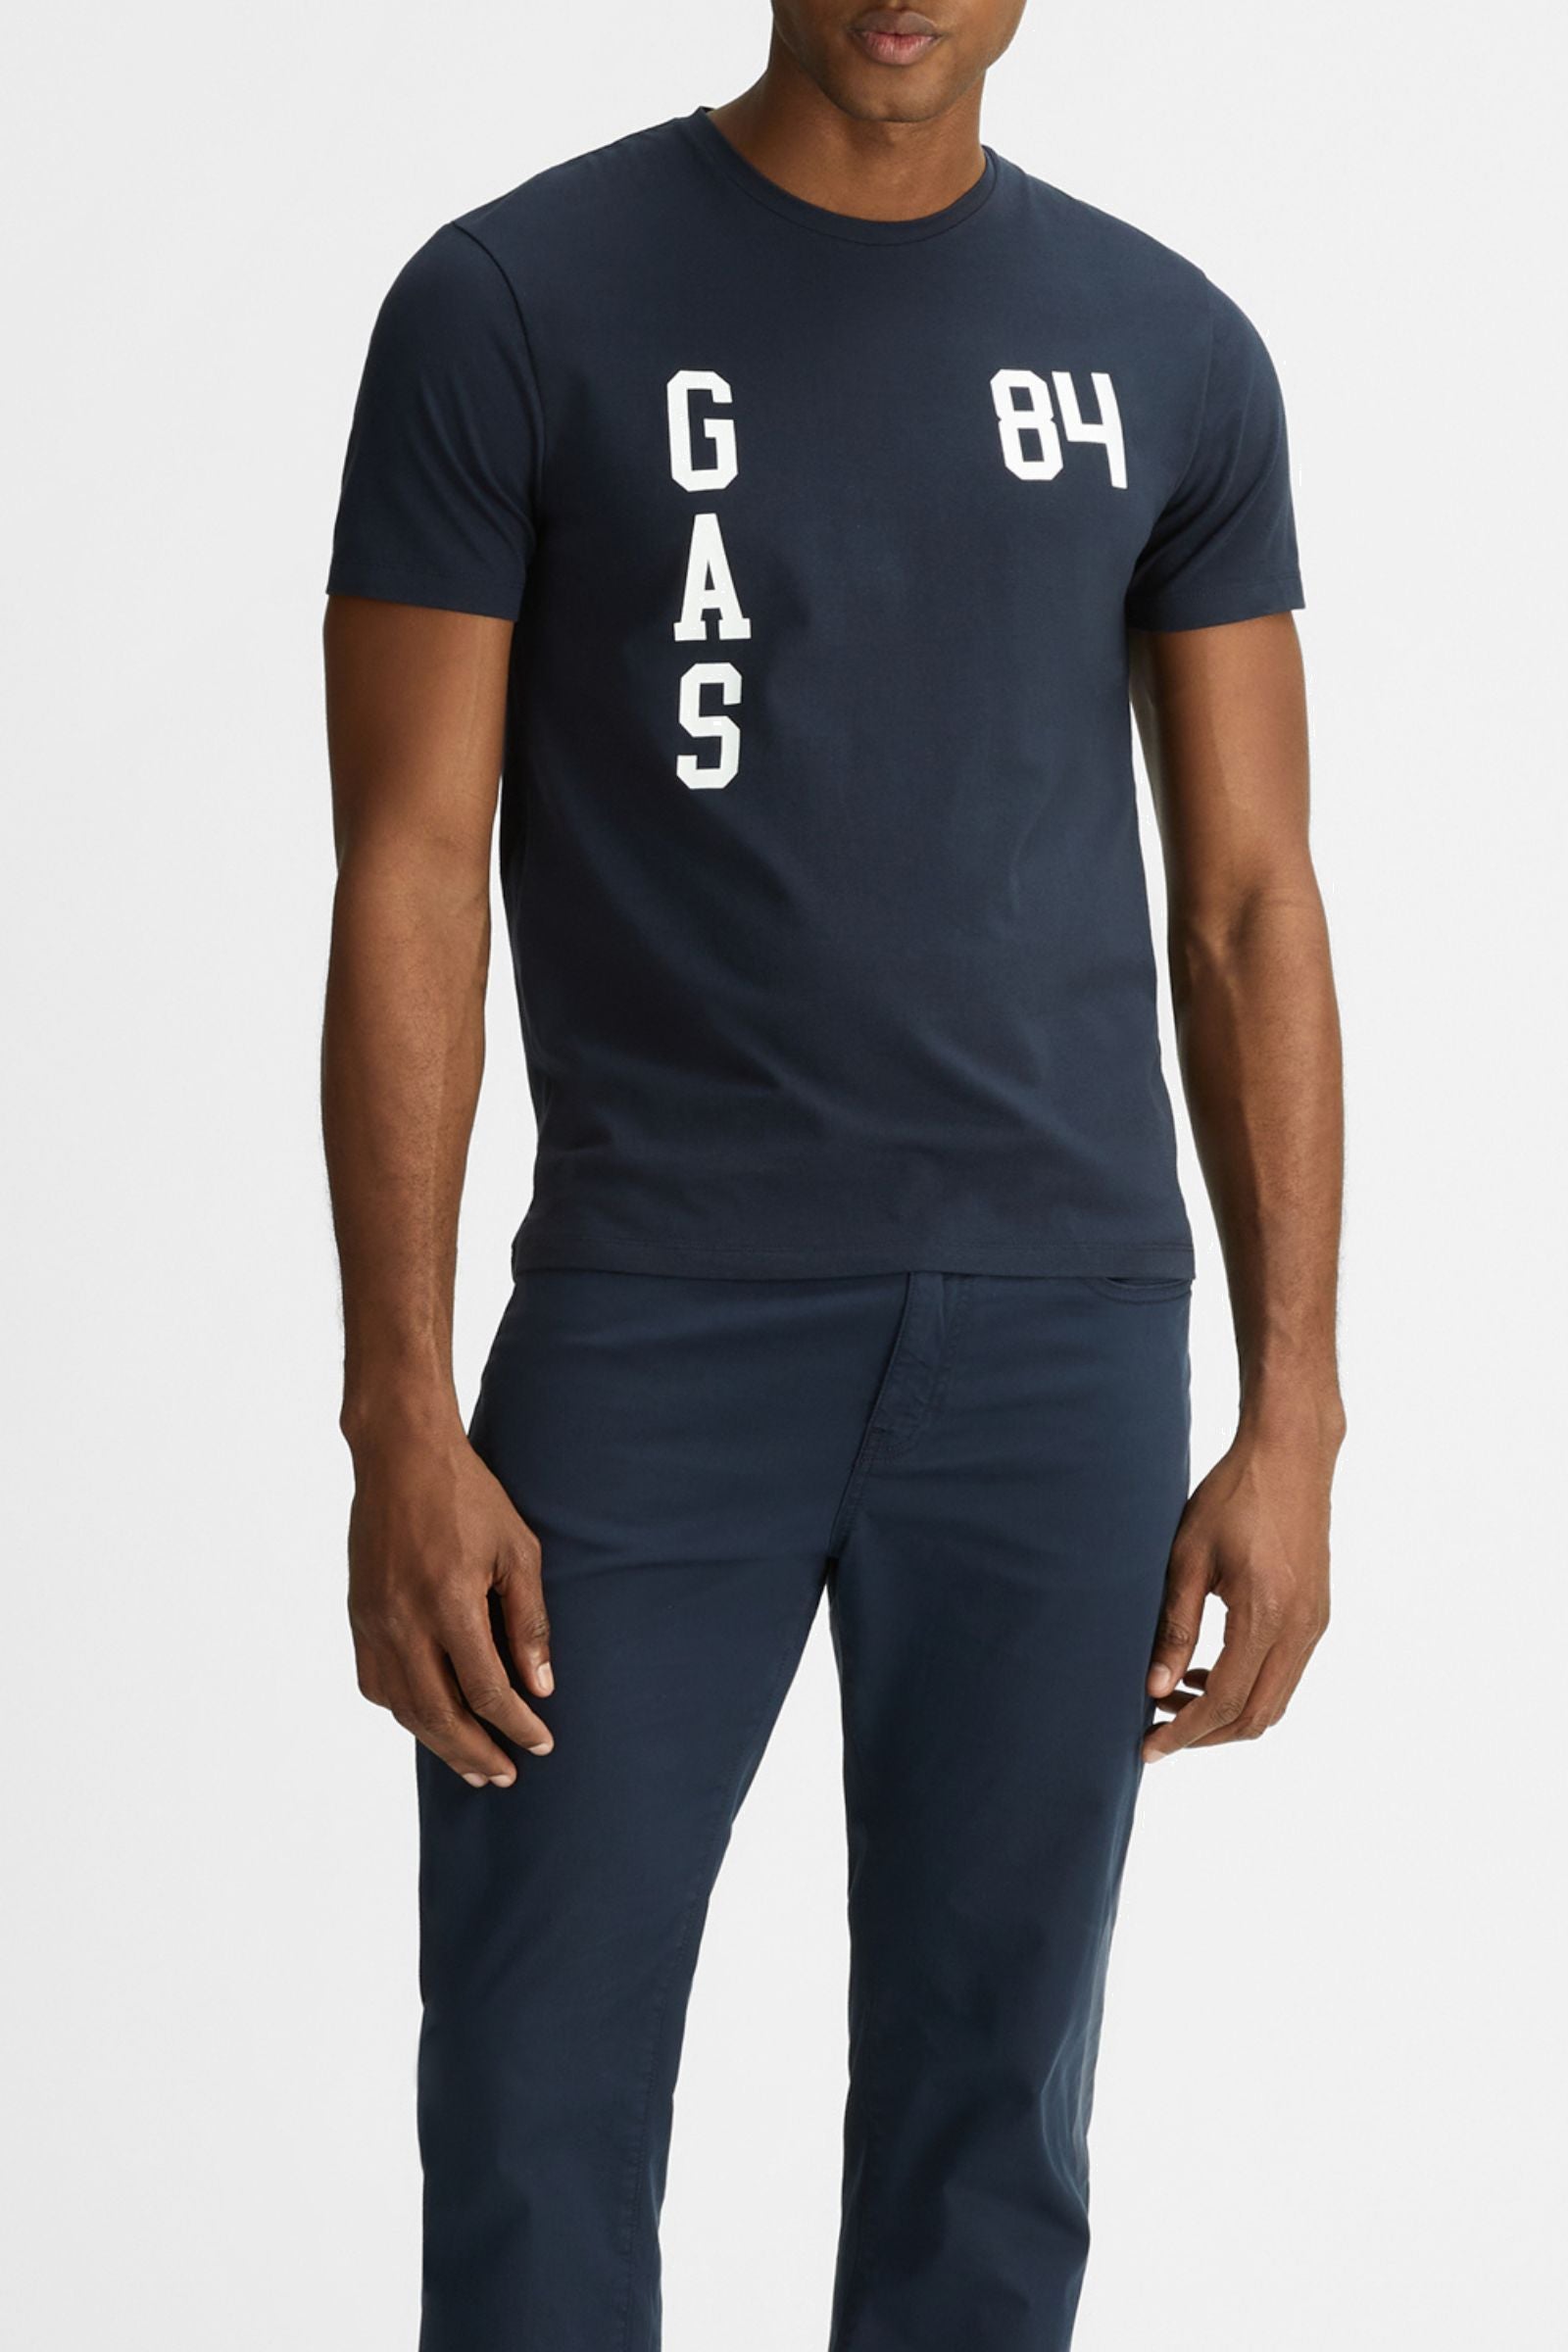 Scuba/S Brand G84 T-Shirt in Navy Blue T-Shirts GAS   